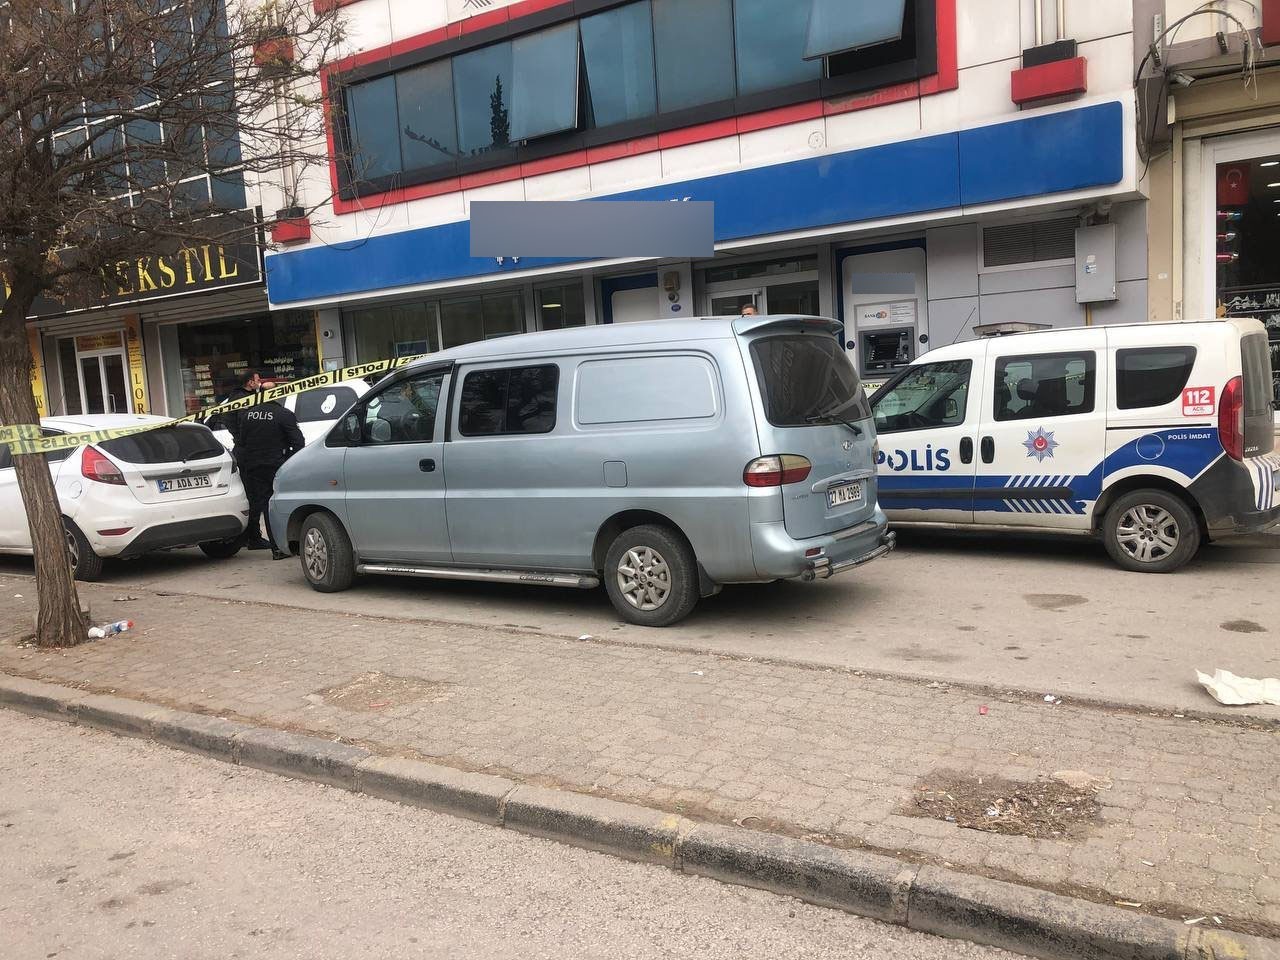 Gaziantep’te silahlı banka soygunu girişimi #gaziantep